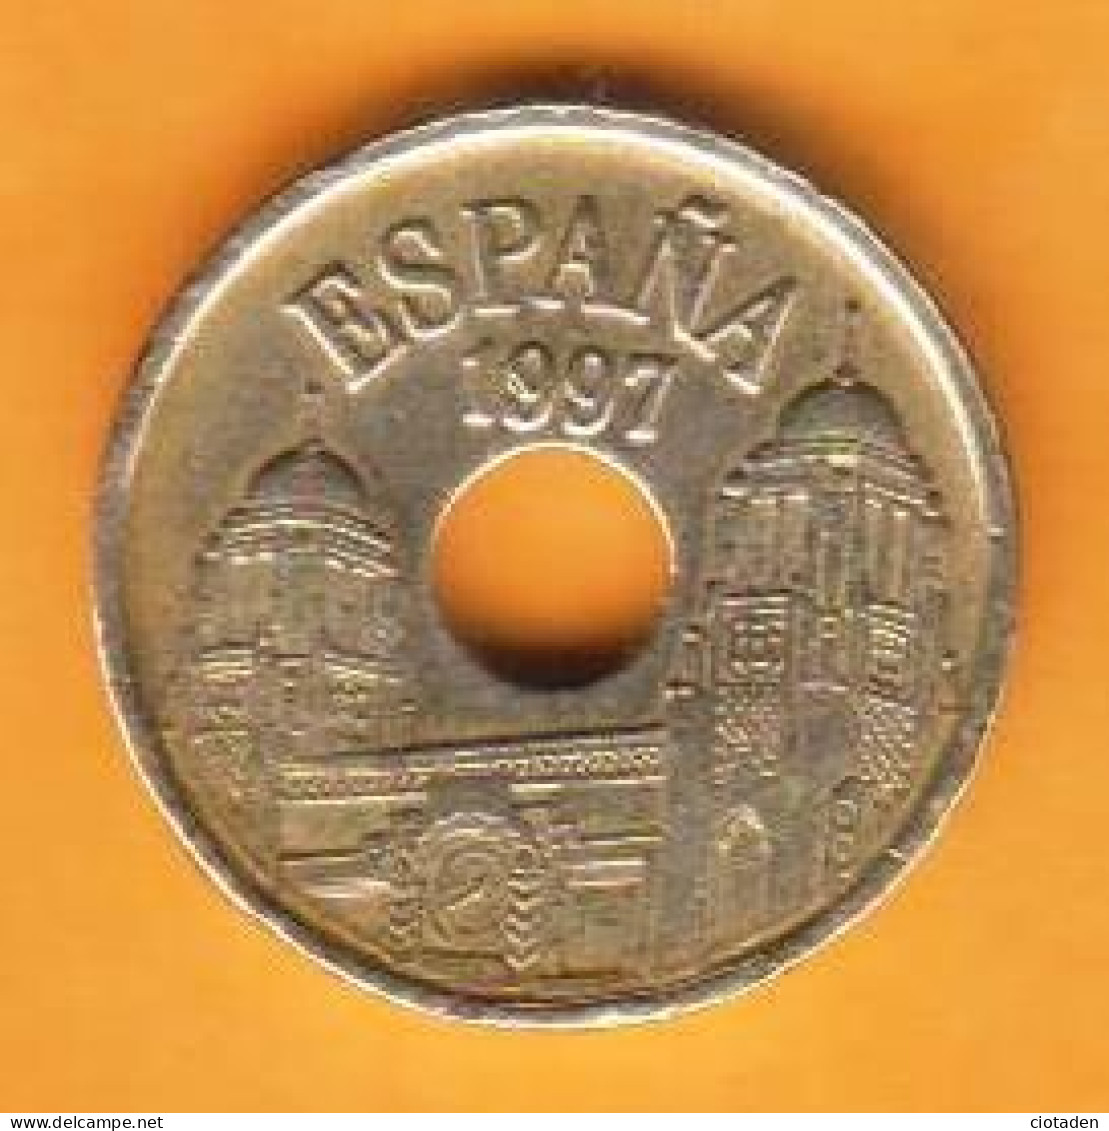 1997 - Espagne - 25pts - 25 Pesetas